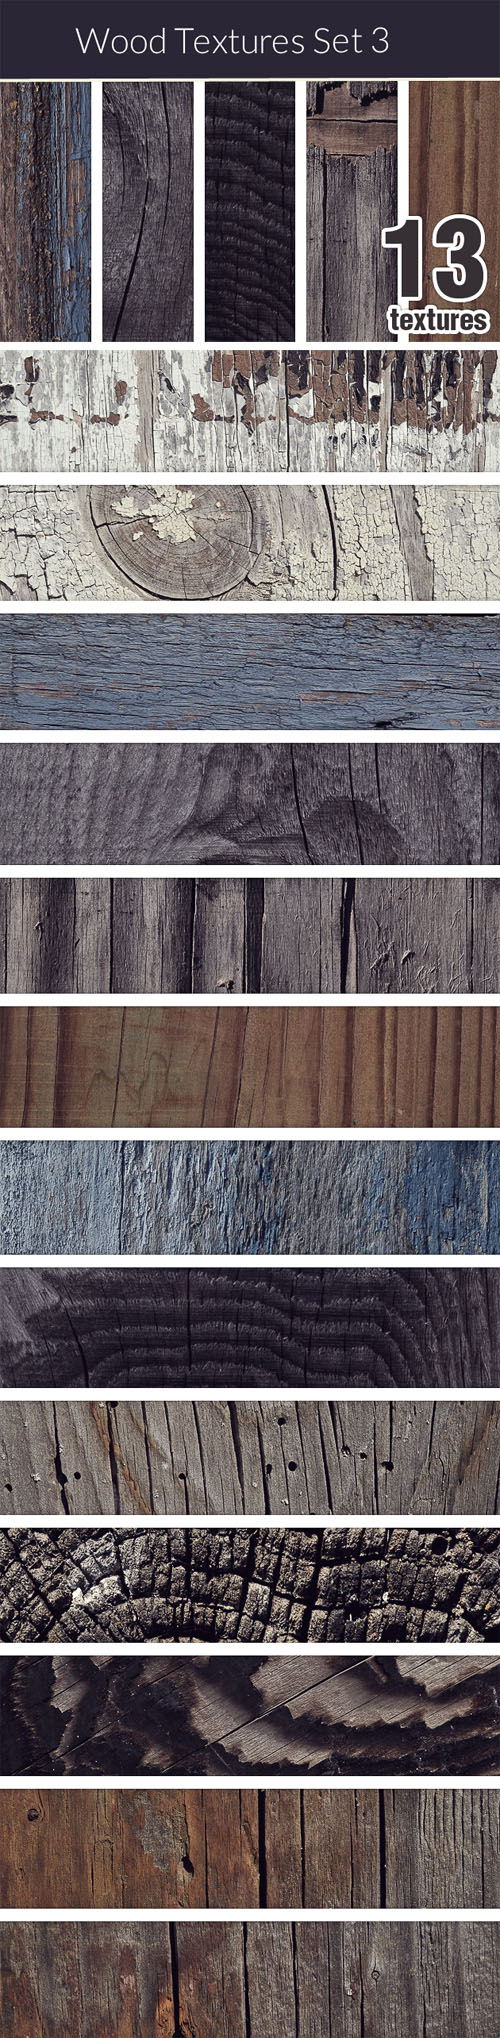 Designtnt - Wood Textures Set 3